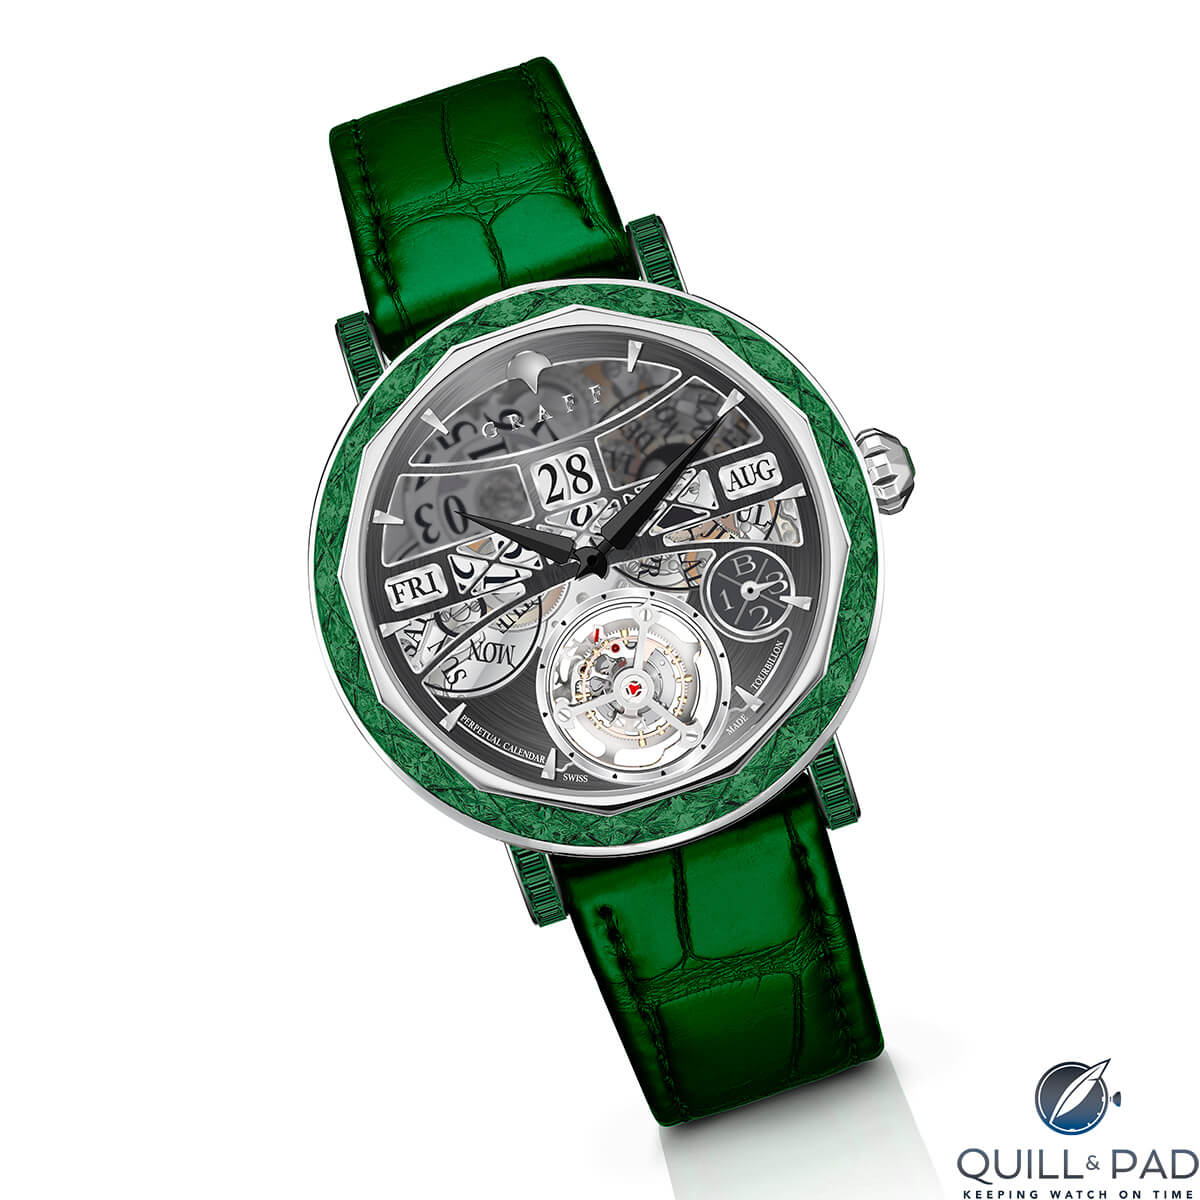 Emerald-set MasterGraff Perpetual Calendar with translucent dial